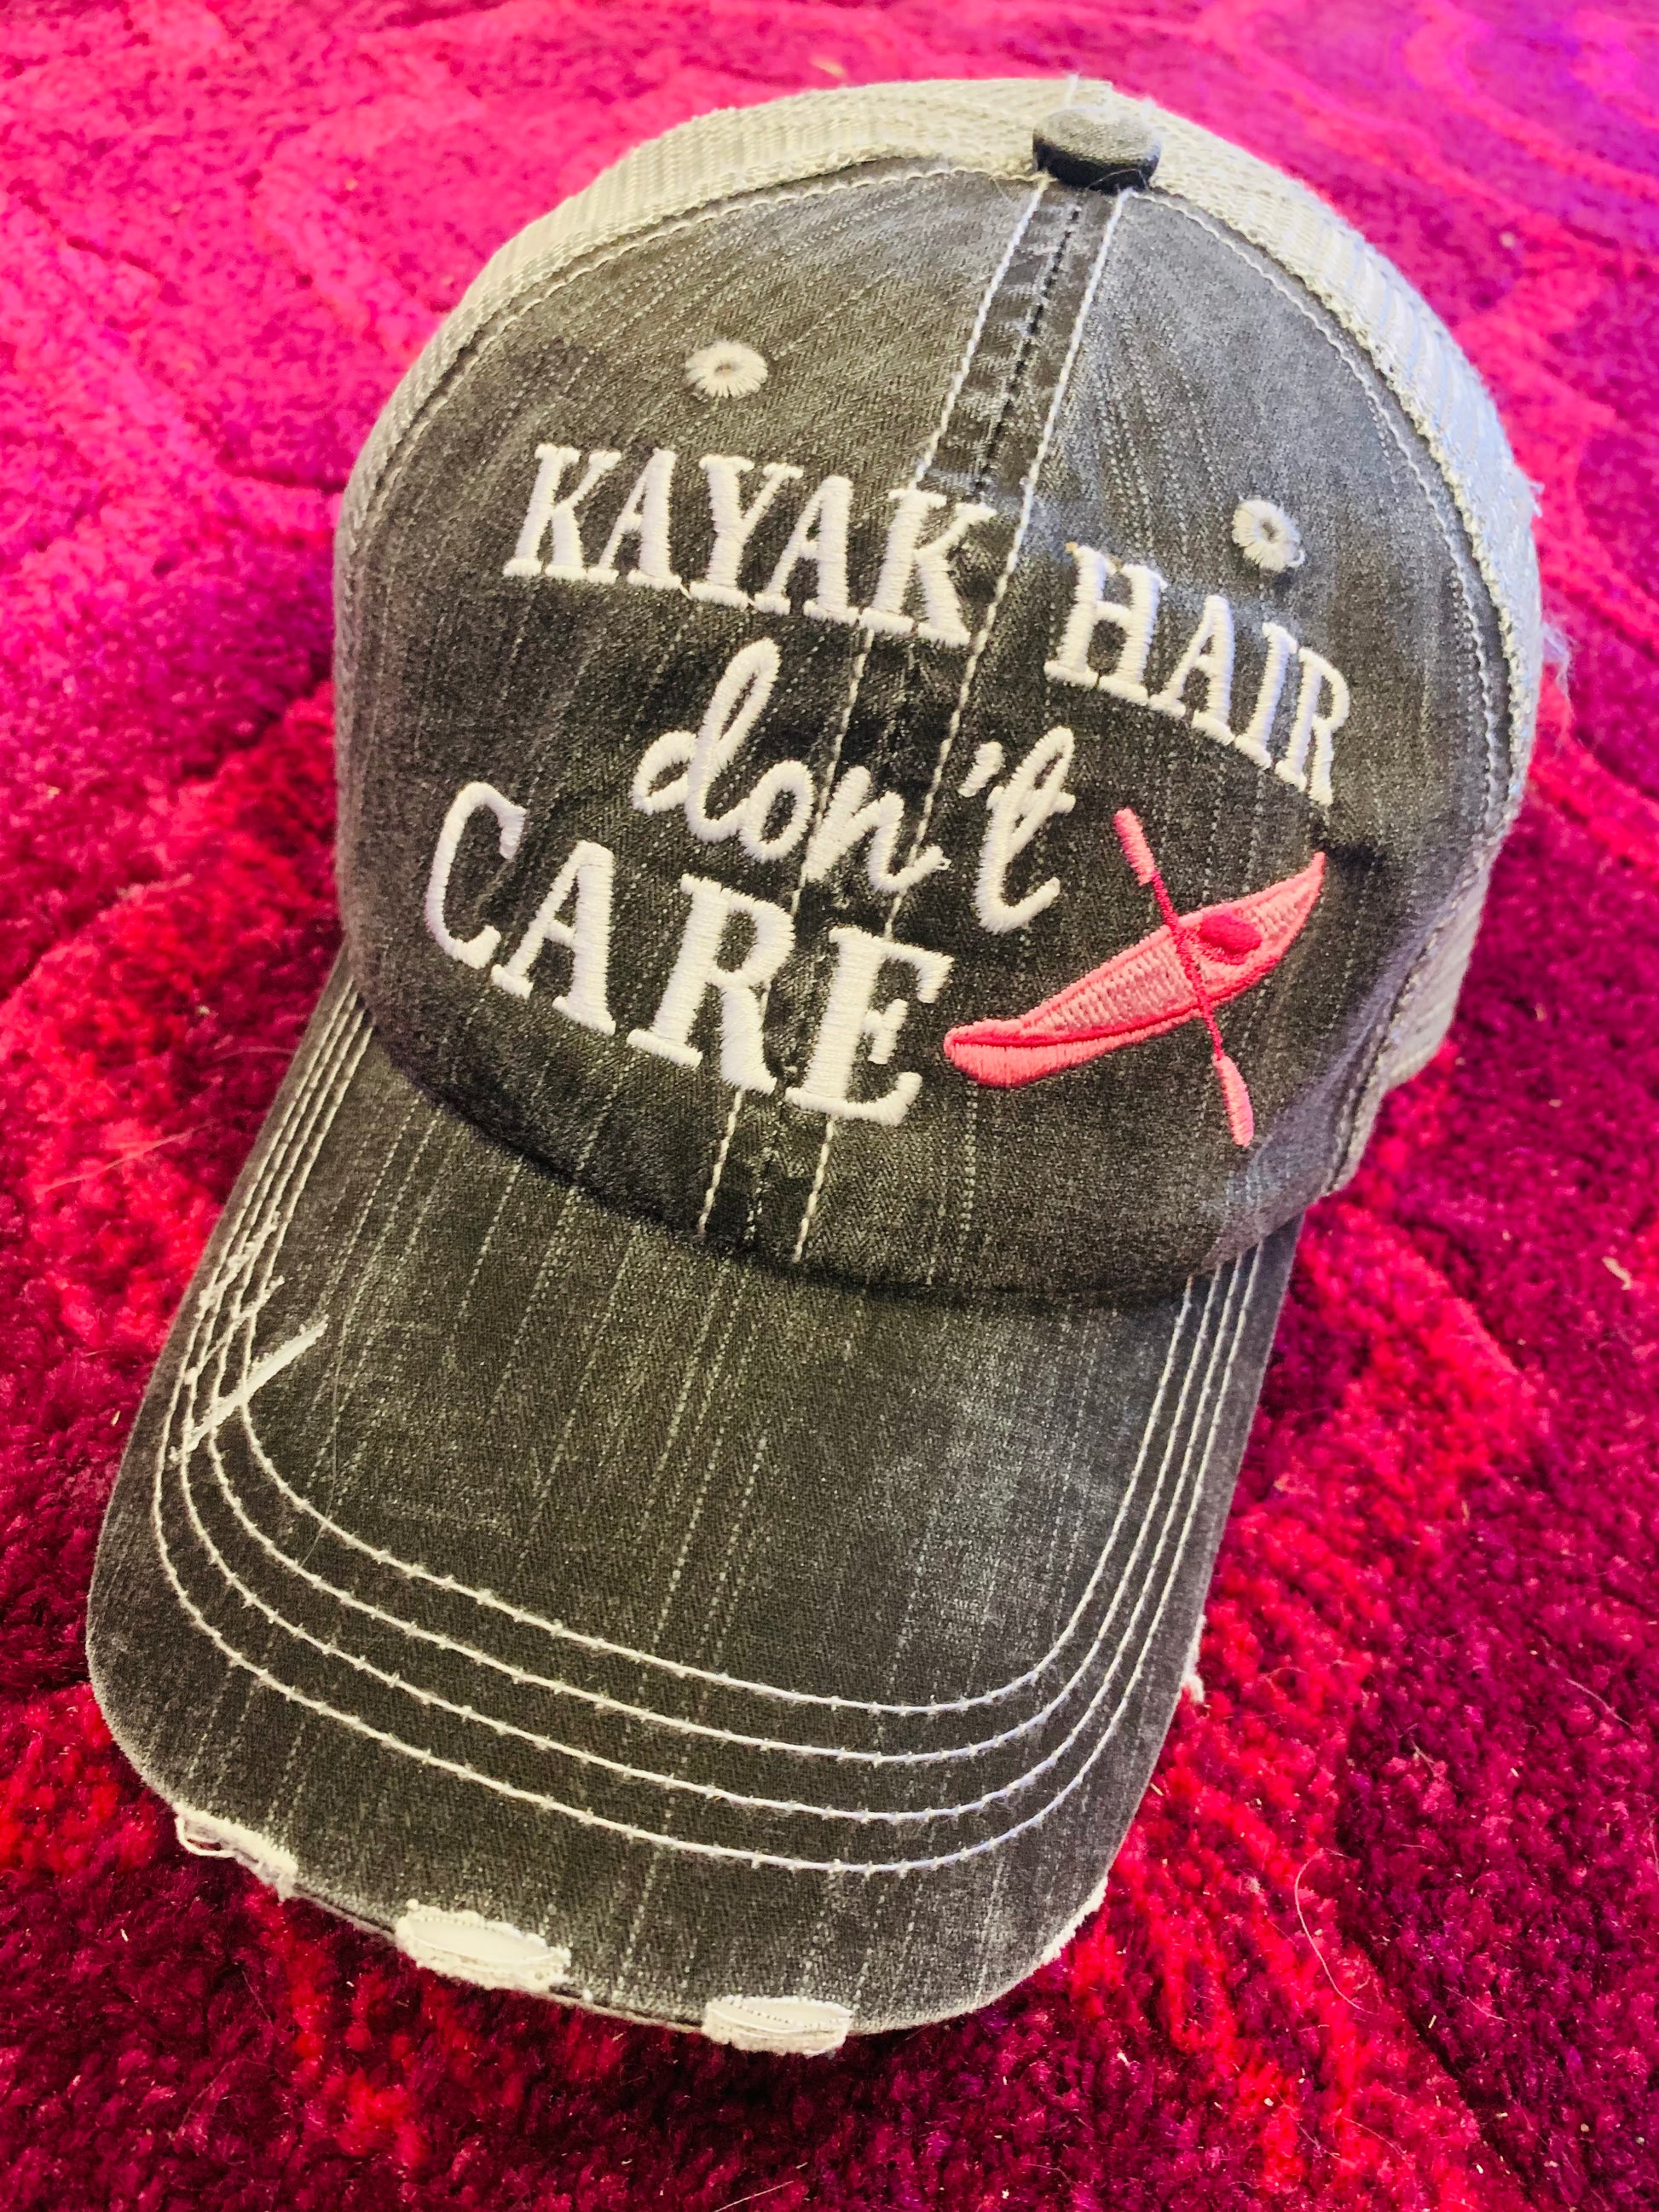 Kayak hats Kayak hair dont care Teal or pink kayak Unisex trucker cap - Stacy's Pink Martini Boutique